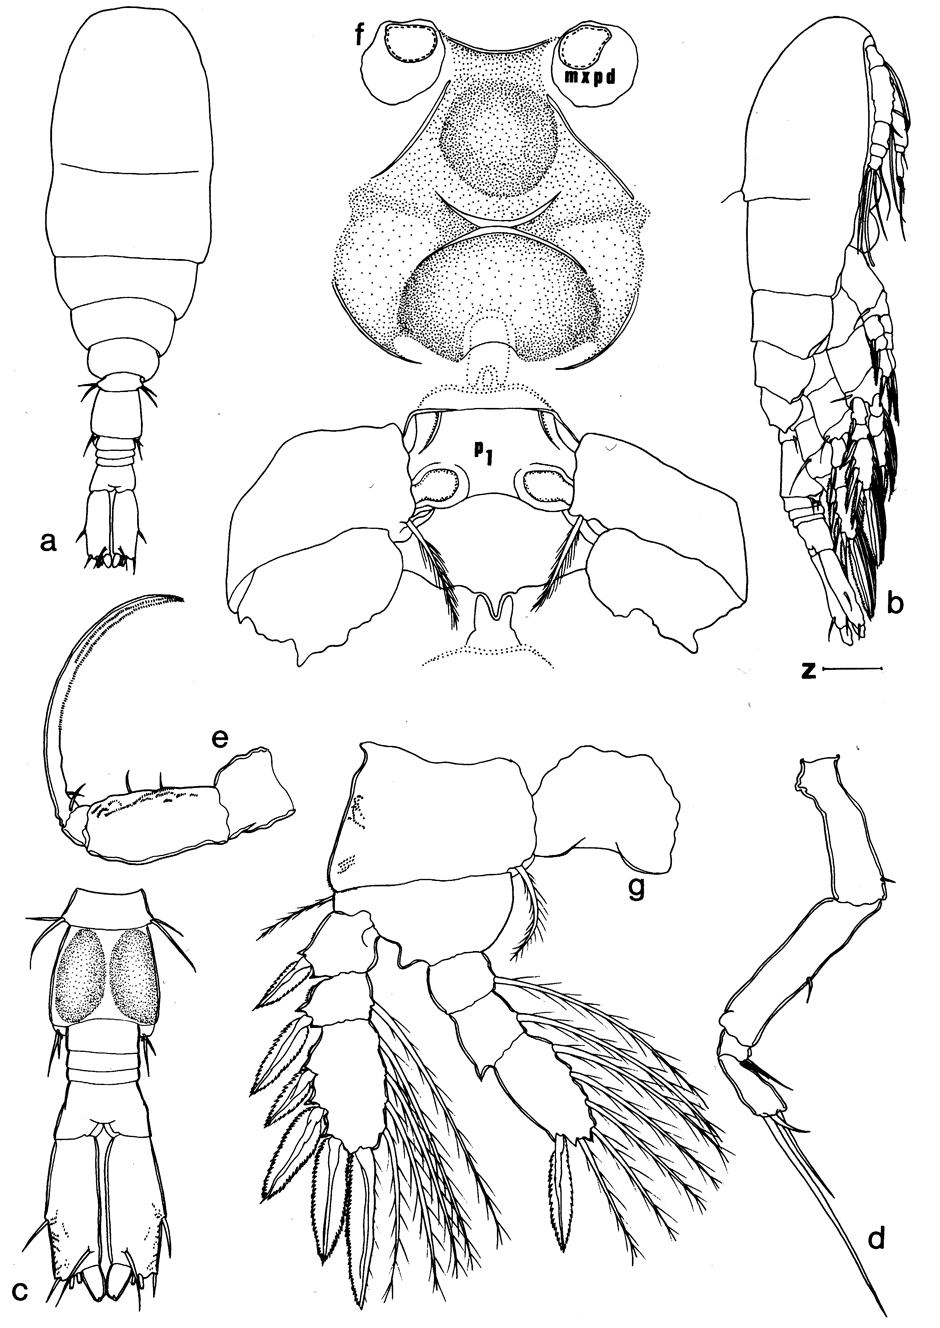 Species Urocopia singularis - Plate 4 of morphological figures